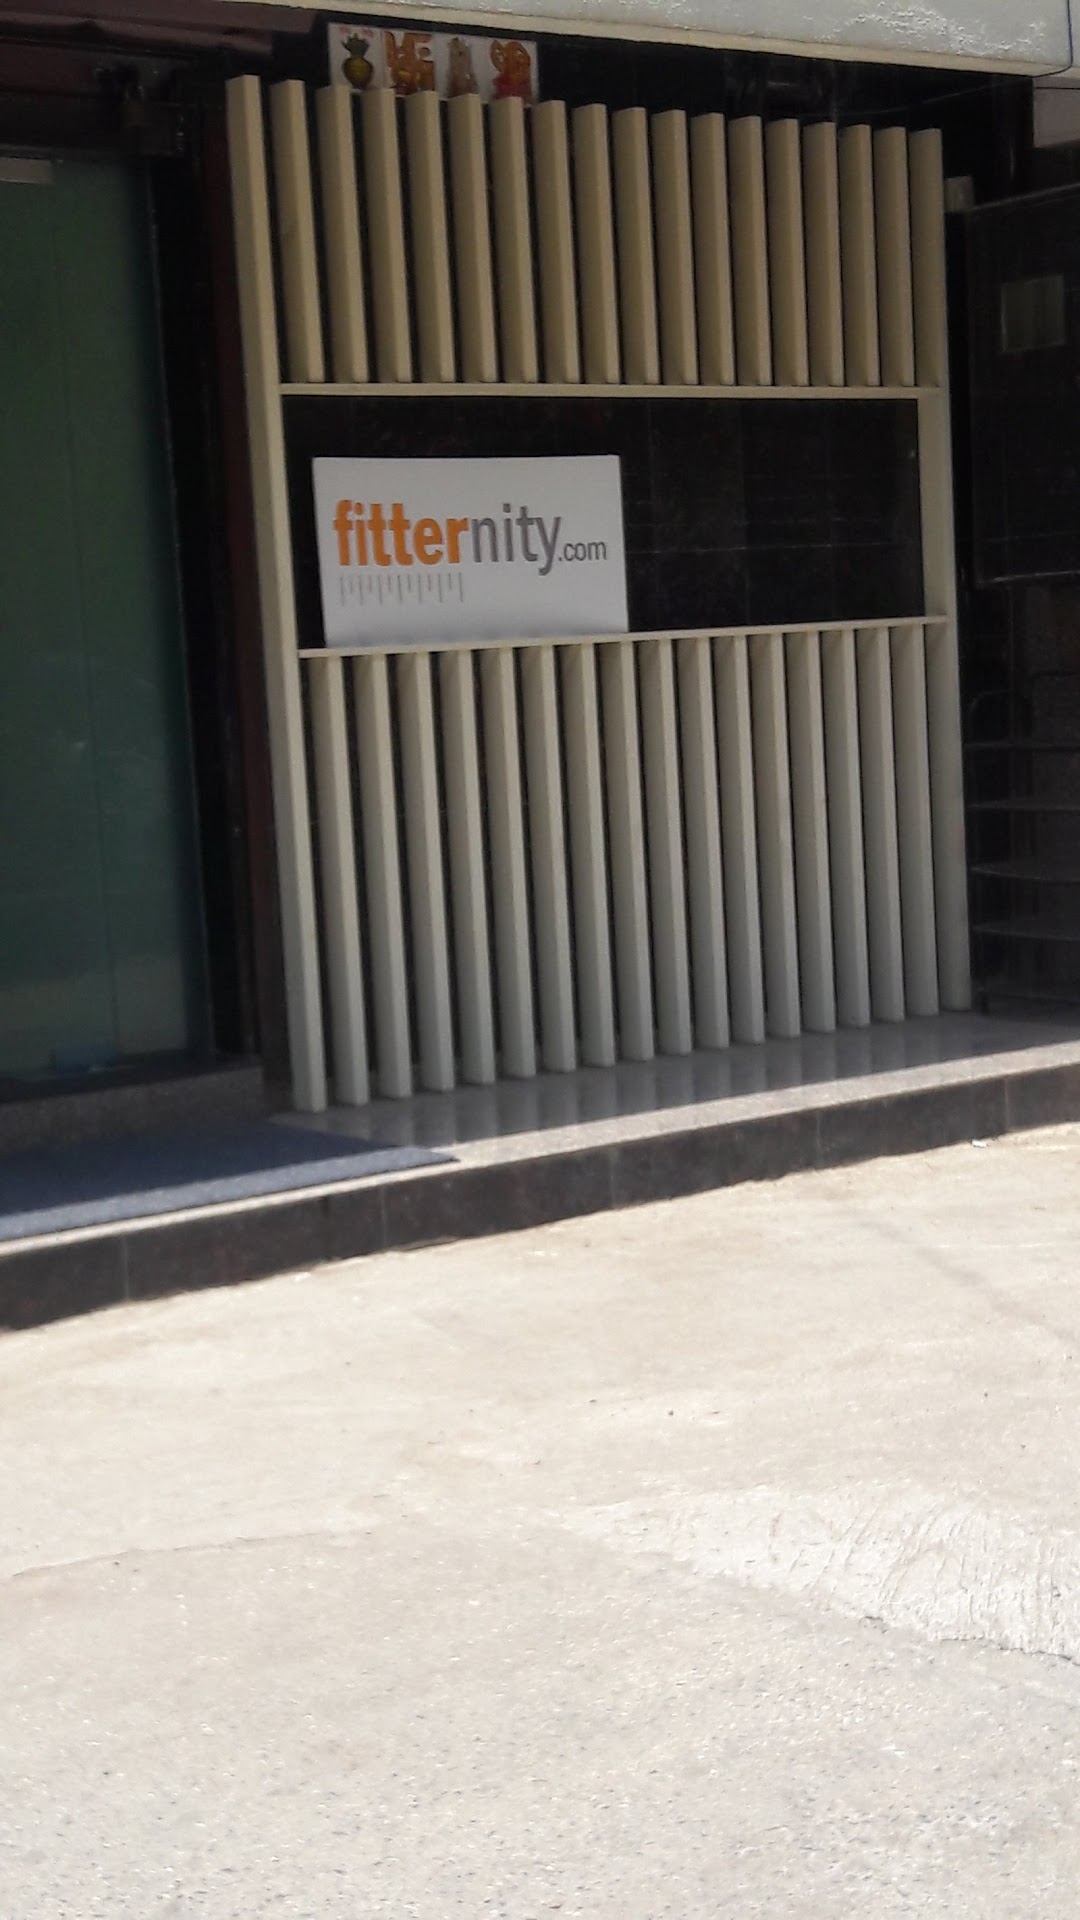 Fitternity.com